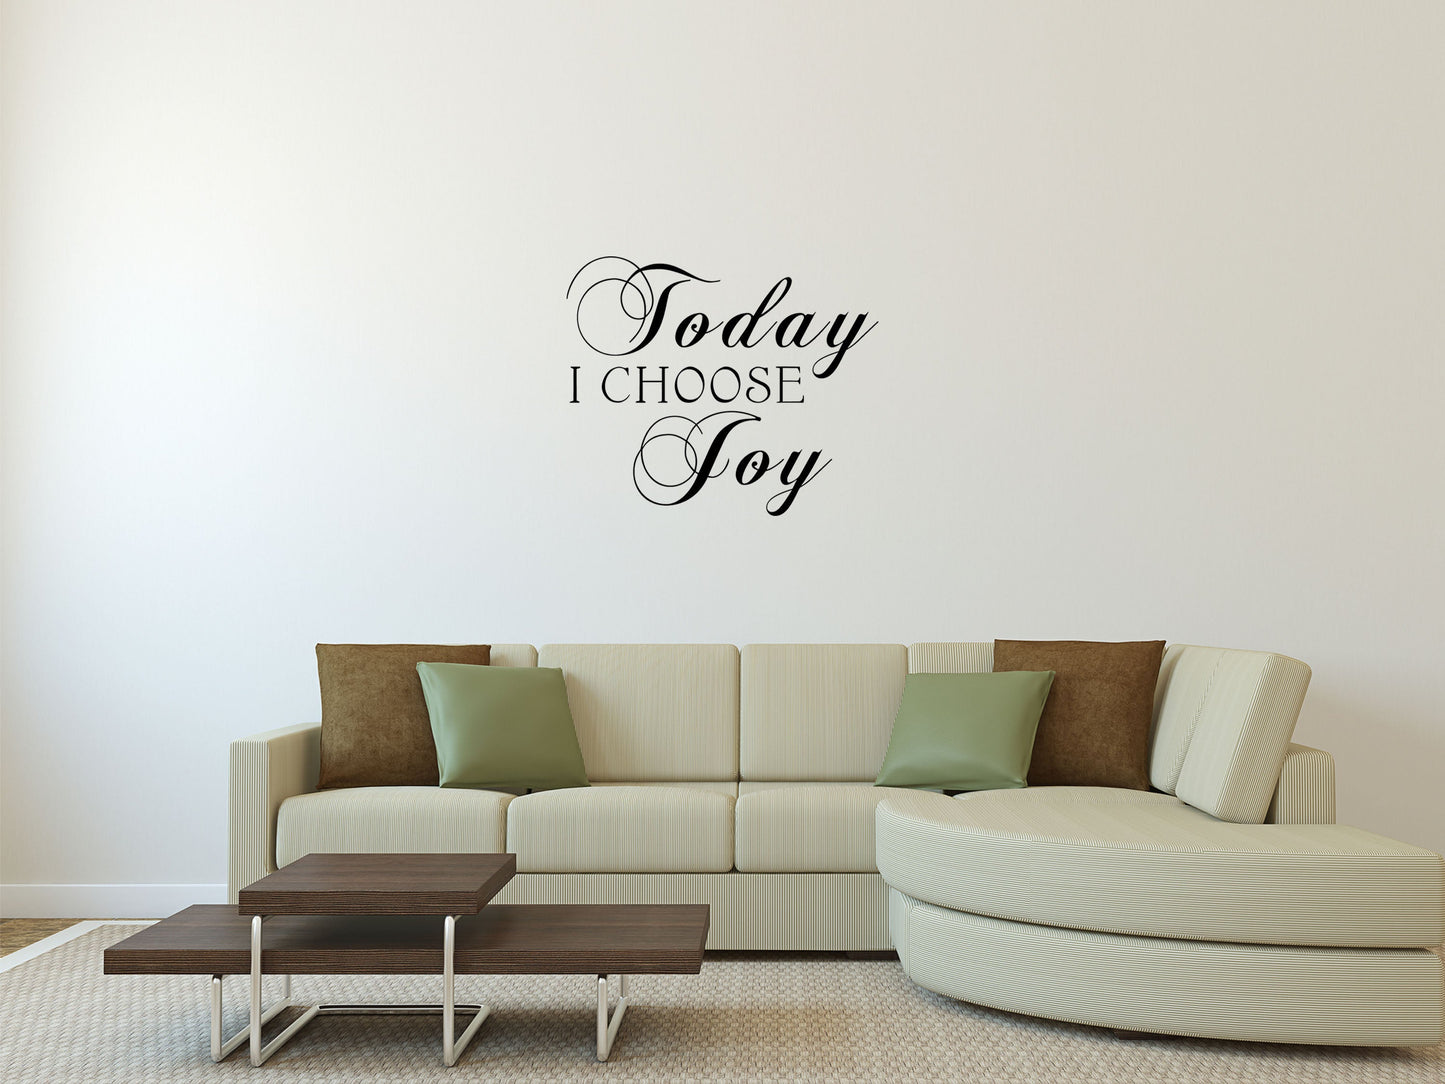 Today I Choose Joy - Inspirational Wall Signs Vinyl Wall Decal Inspirational Wall Signs 